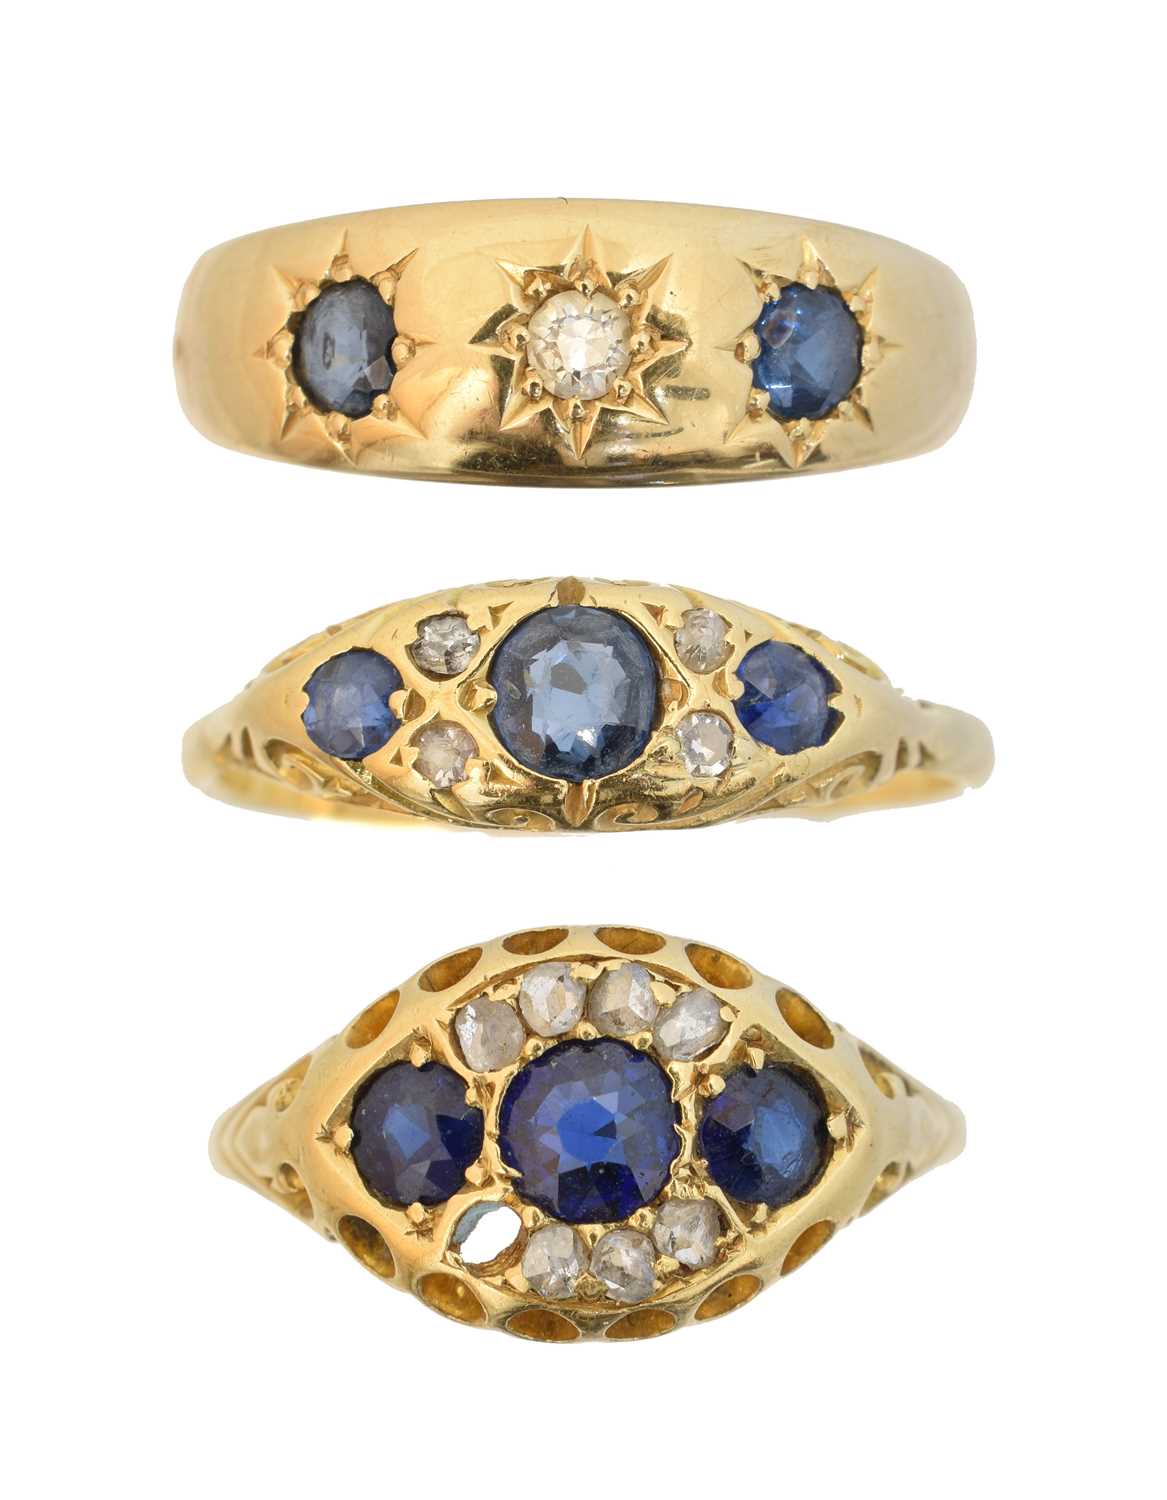 Lot Three 18ct gold sapphire and diamond dress rings